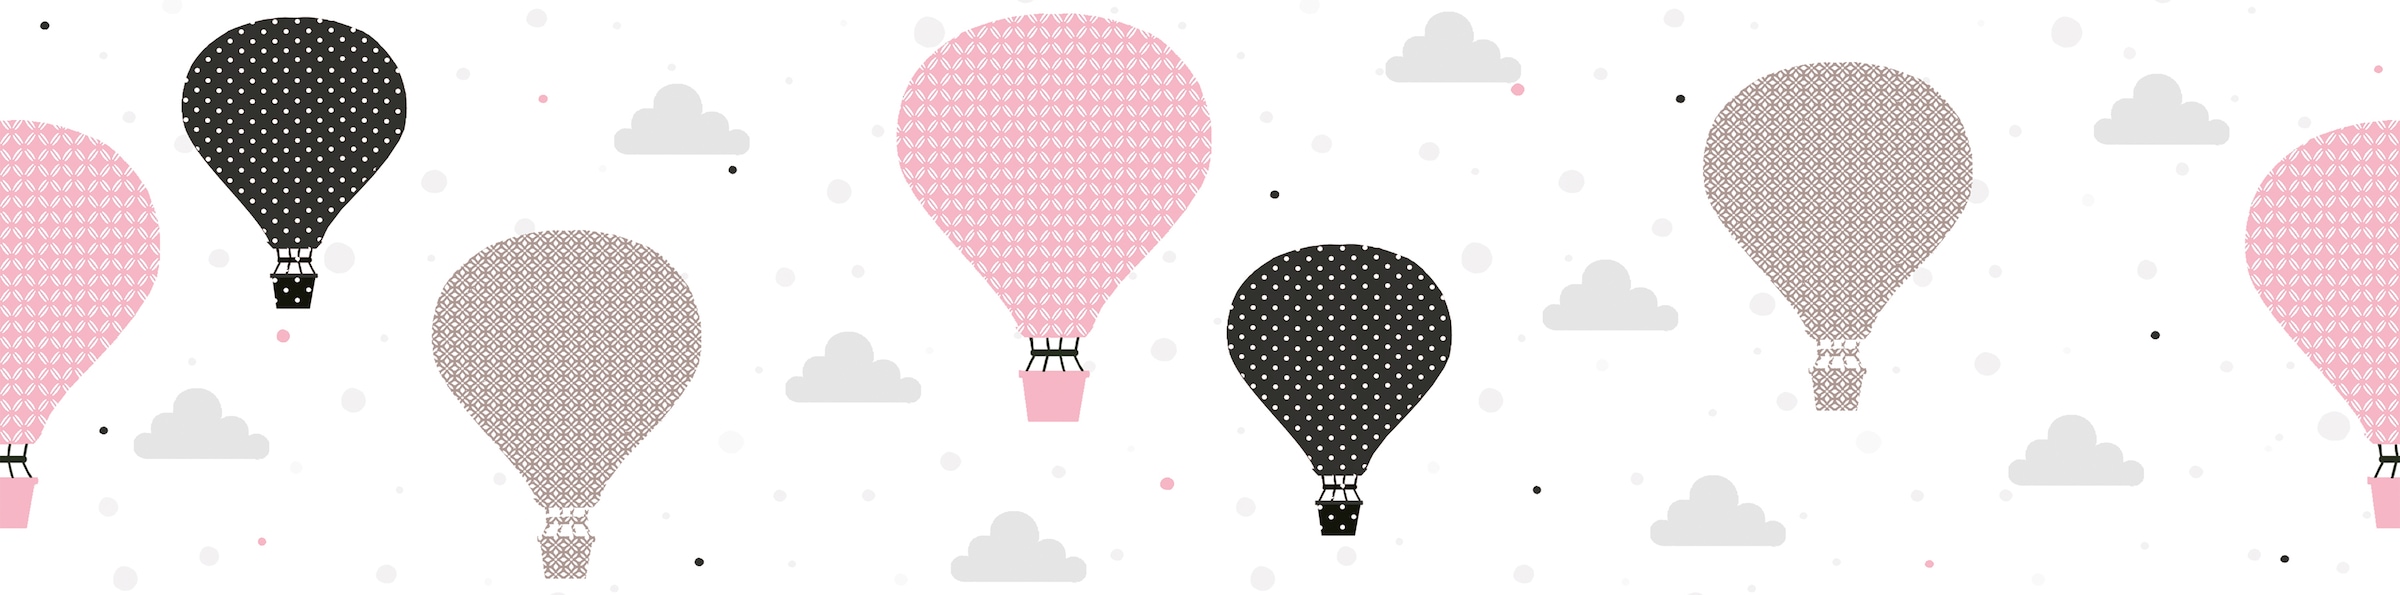 Bordüre »Cloud Balloons«, Heißluftballon Bordüre Tapete Kinderzimmer Rosa Grau Schwarz